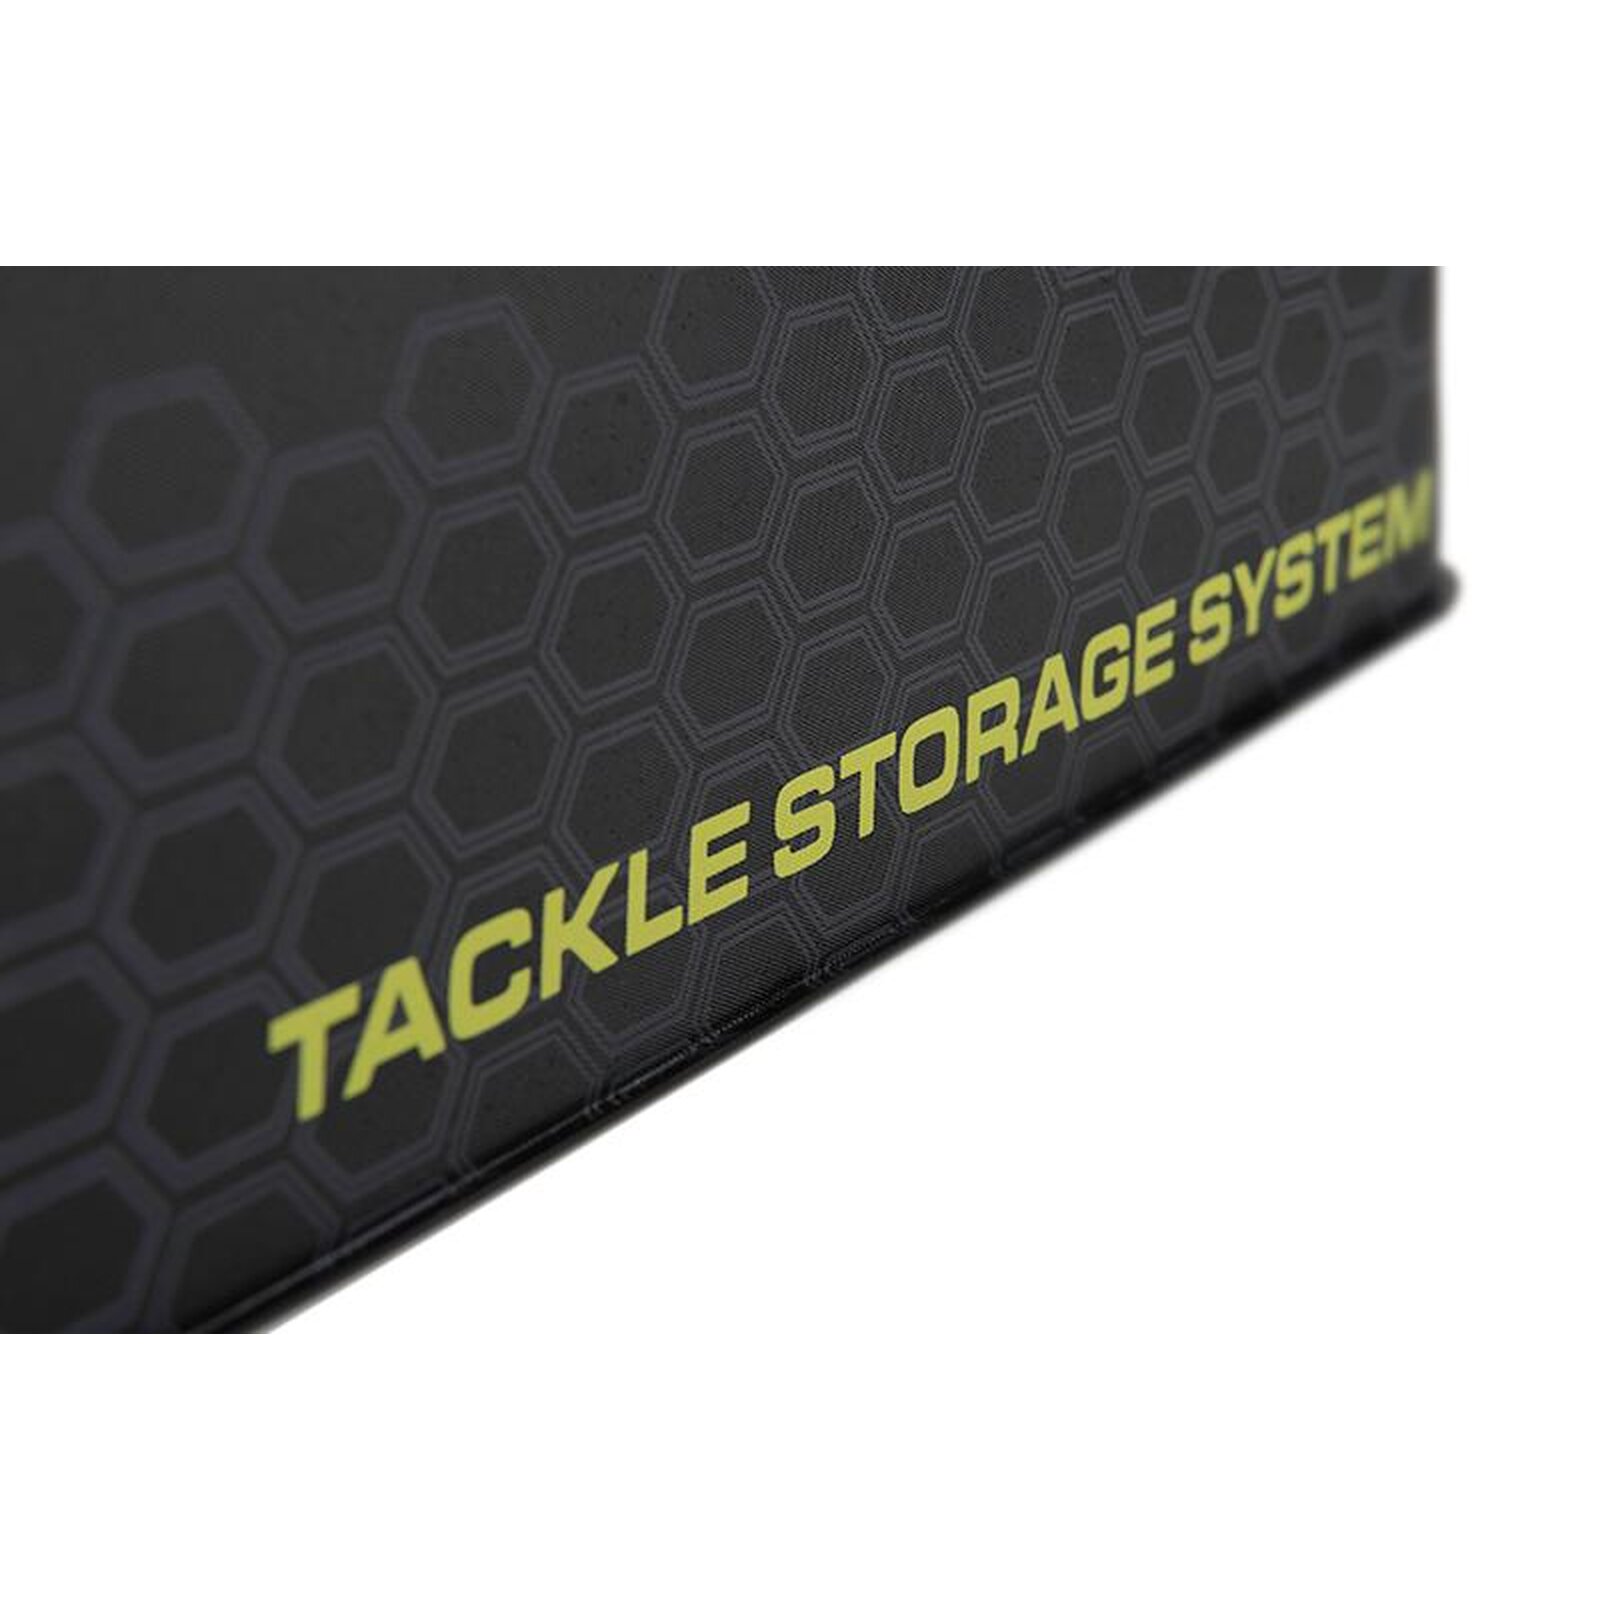 Matrix EVA Tackle Storage System